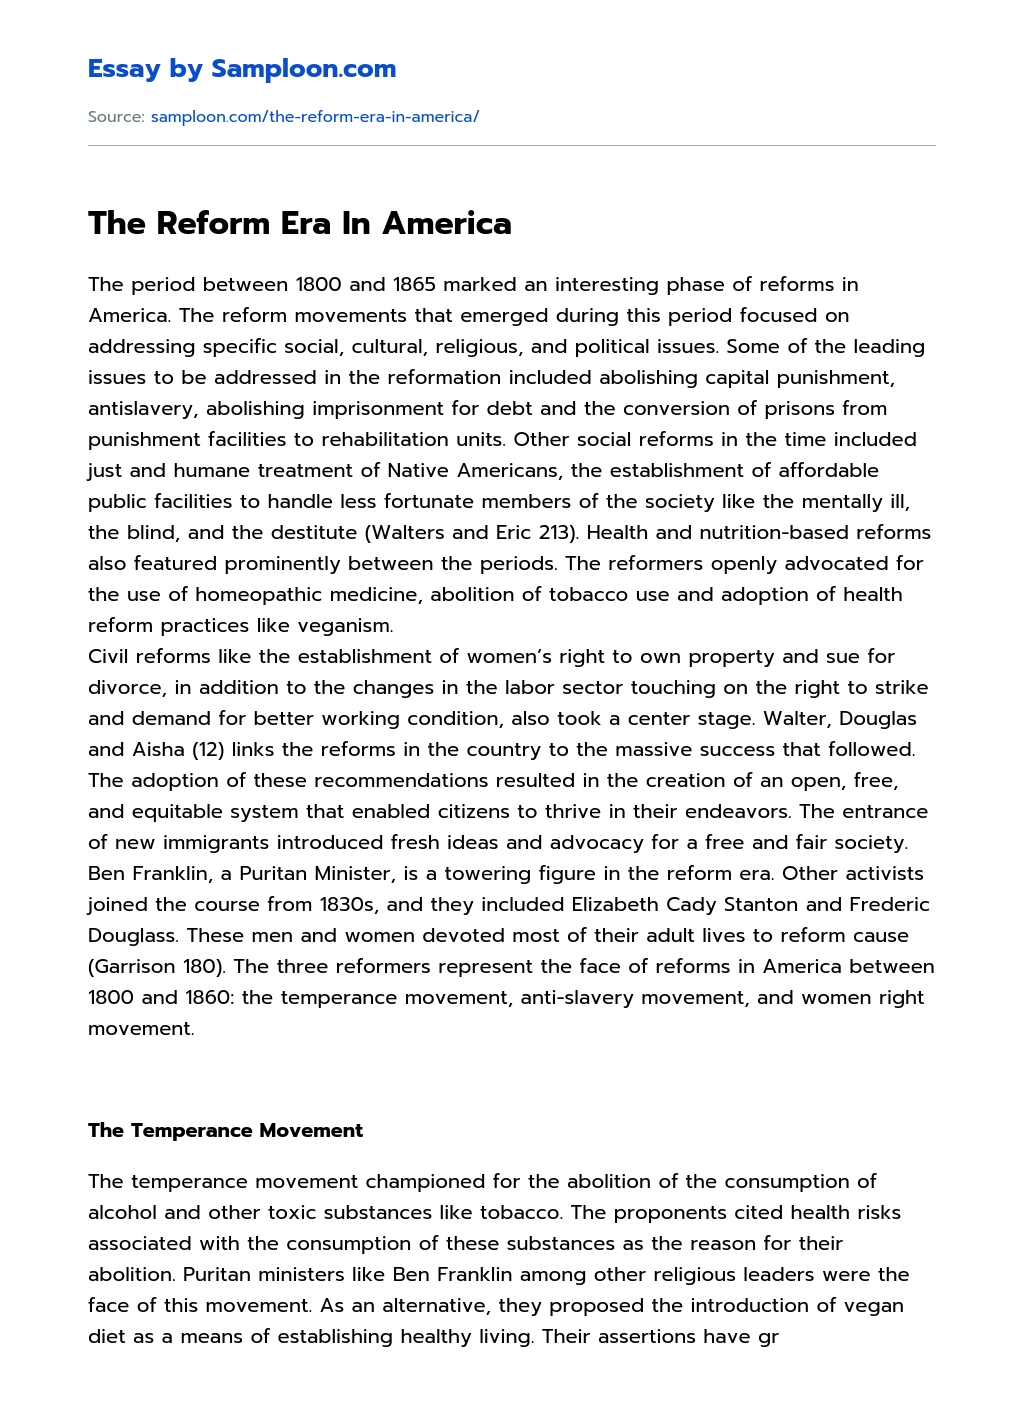 The Reform Era In America essay